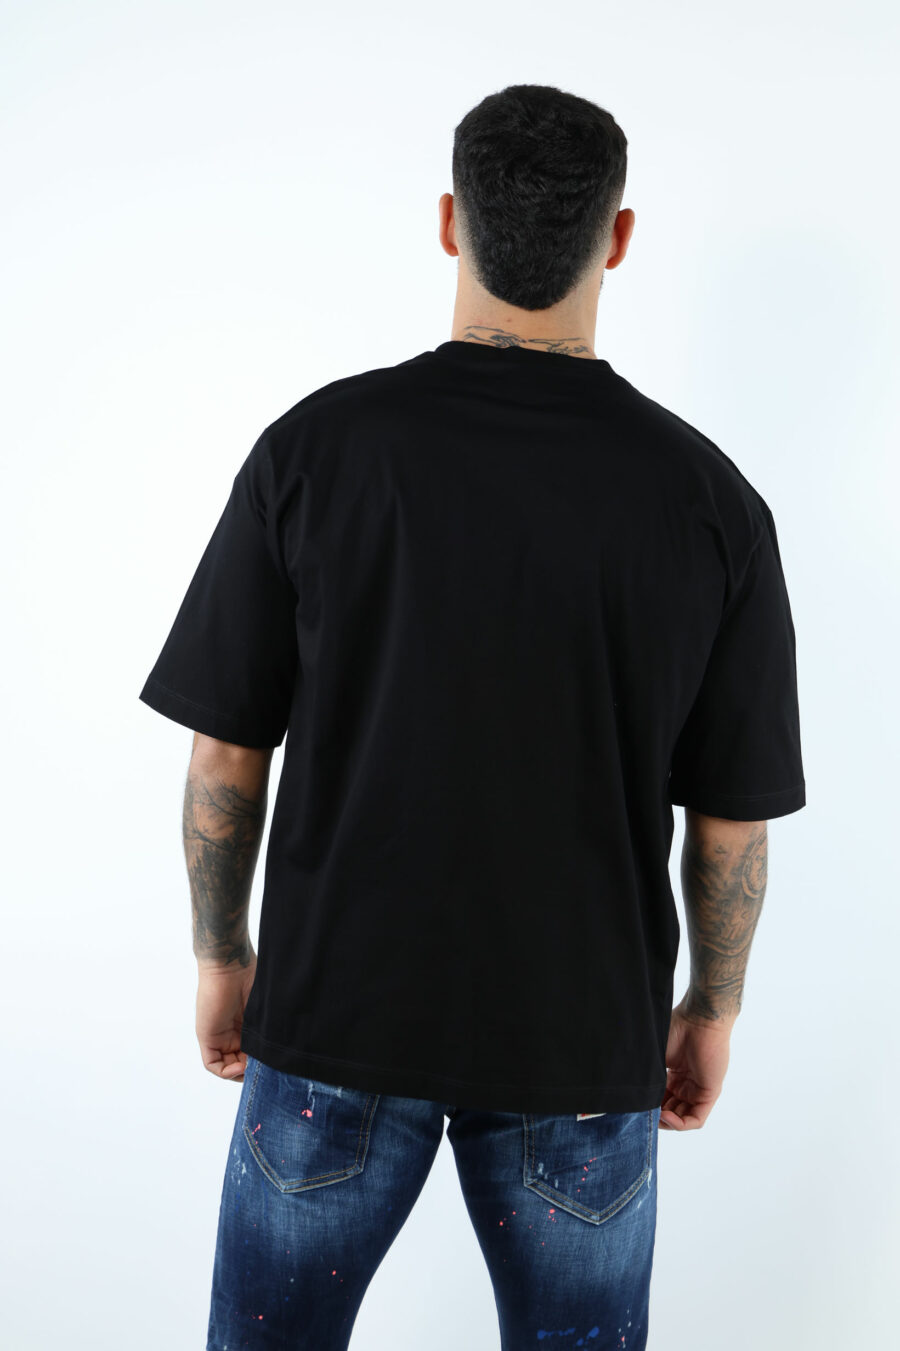 T-shirt oversize noir avec maxilogo "icon" flou vert fluo - 106934